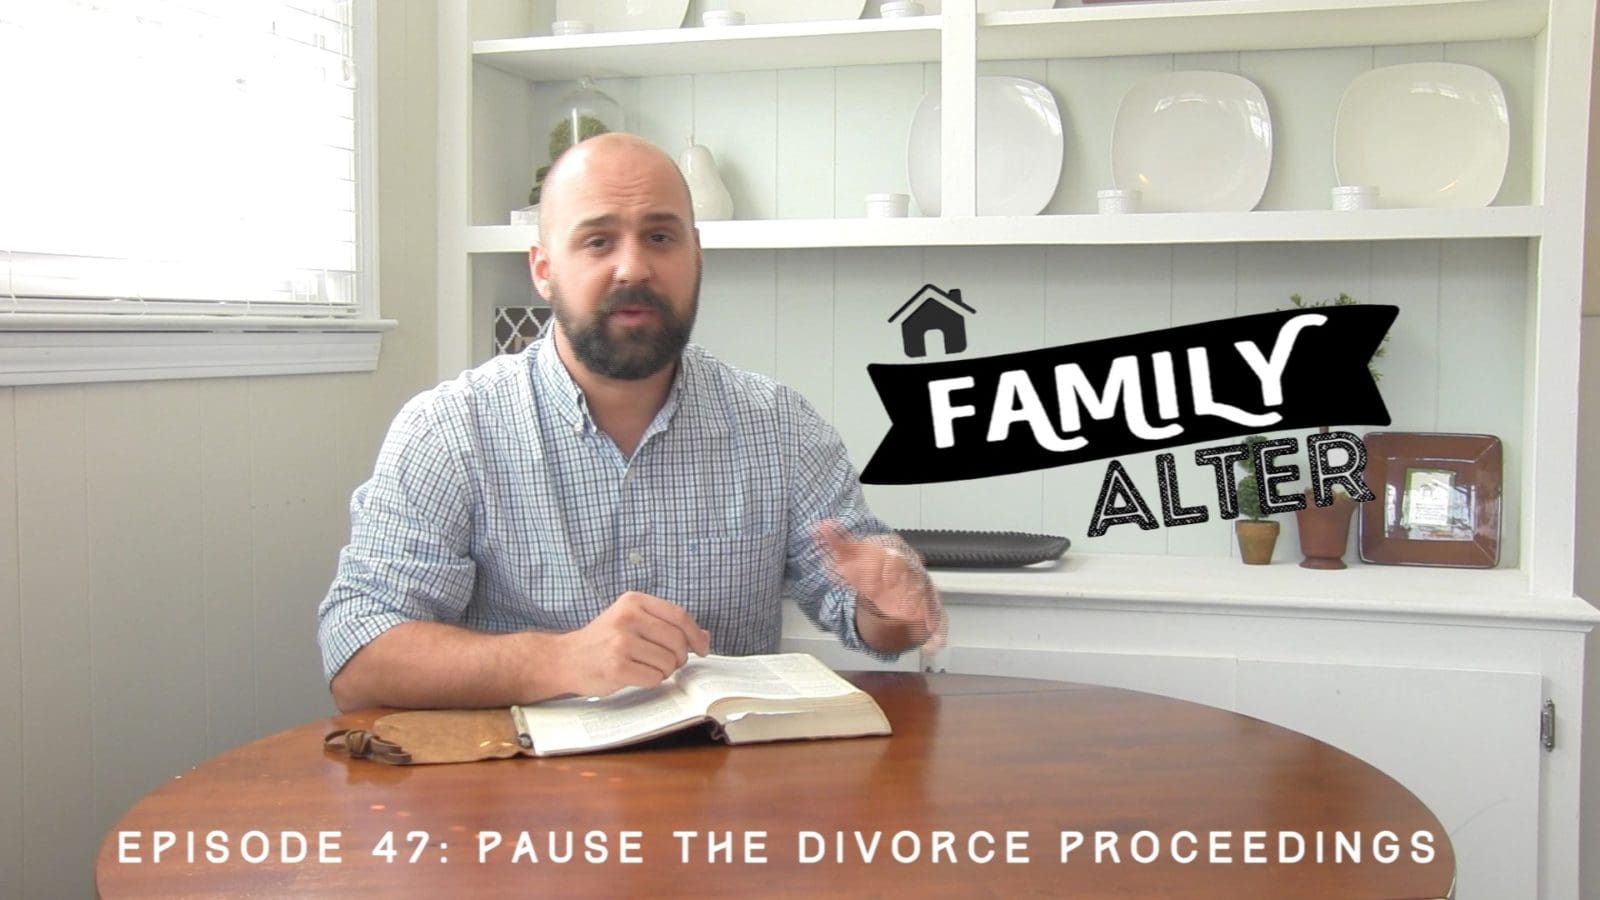 Pause the Divorce Proceedings